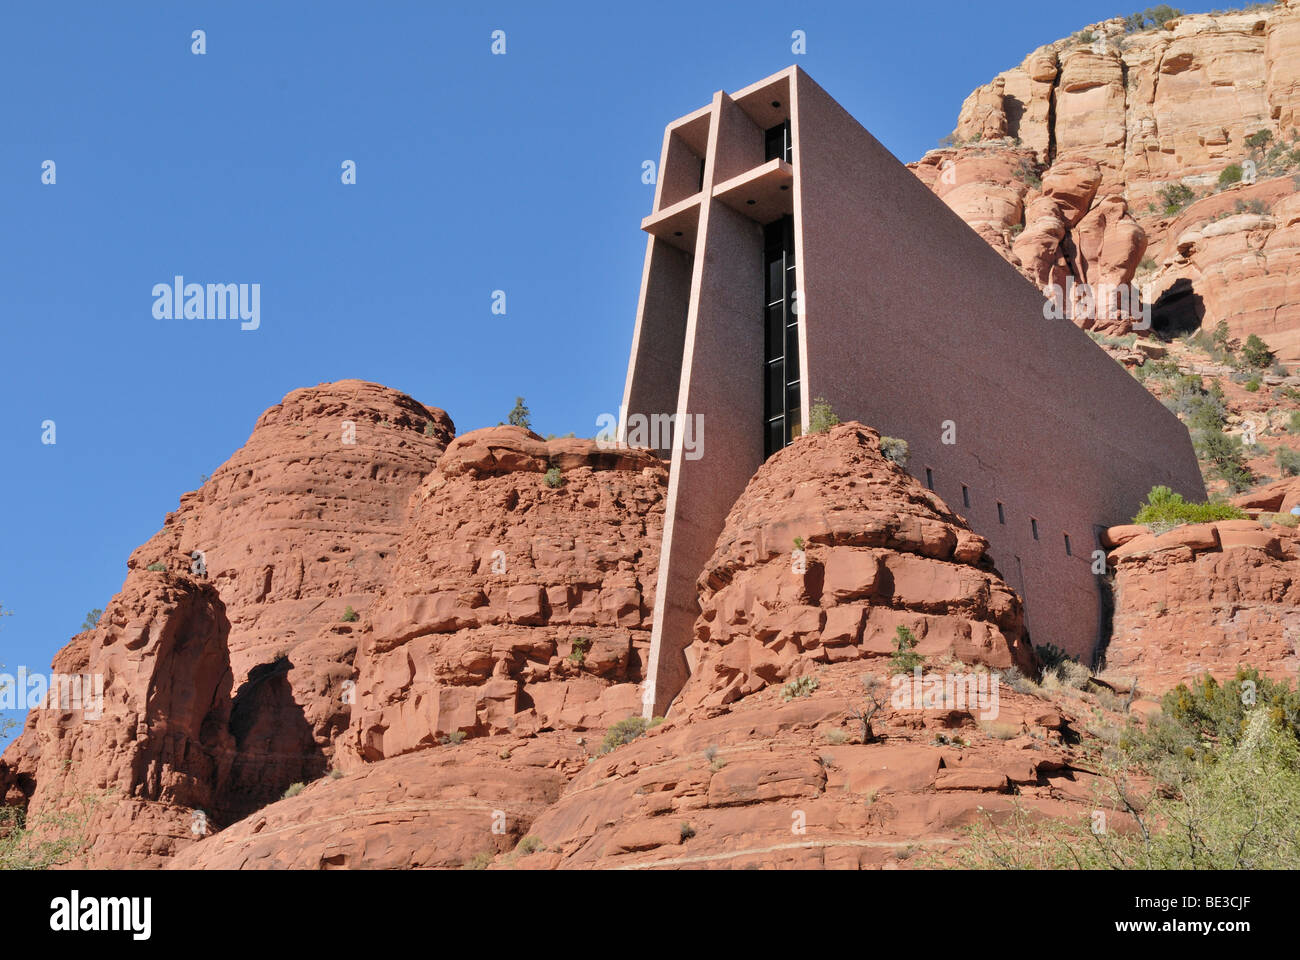 Cappella di Santa Croce, moderna chiesa rupestre dal '50s, Sedona, in Arizona, Stati Uniti d'America Foto Stock